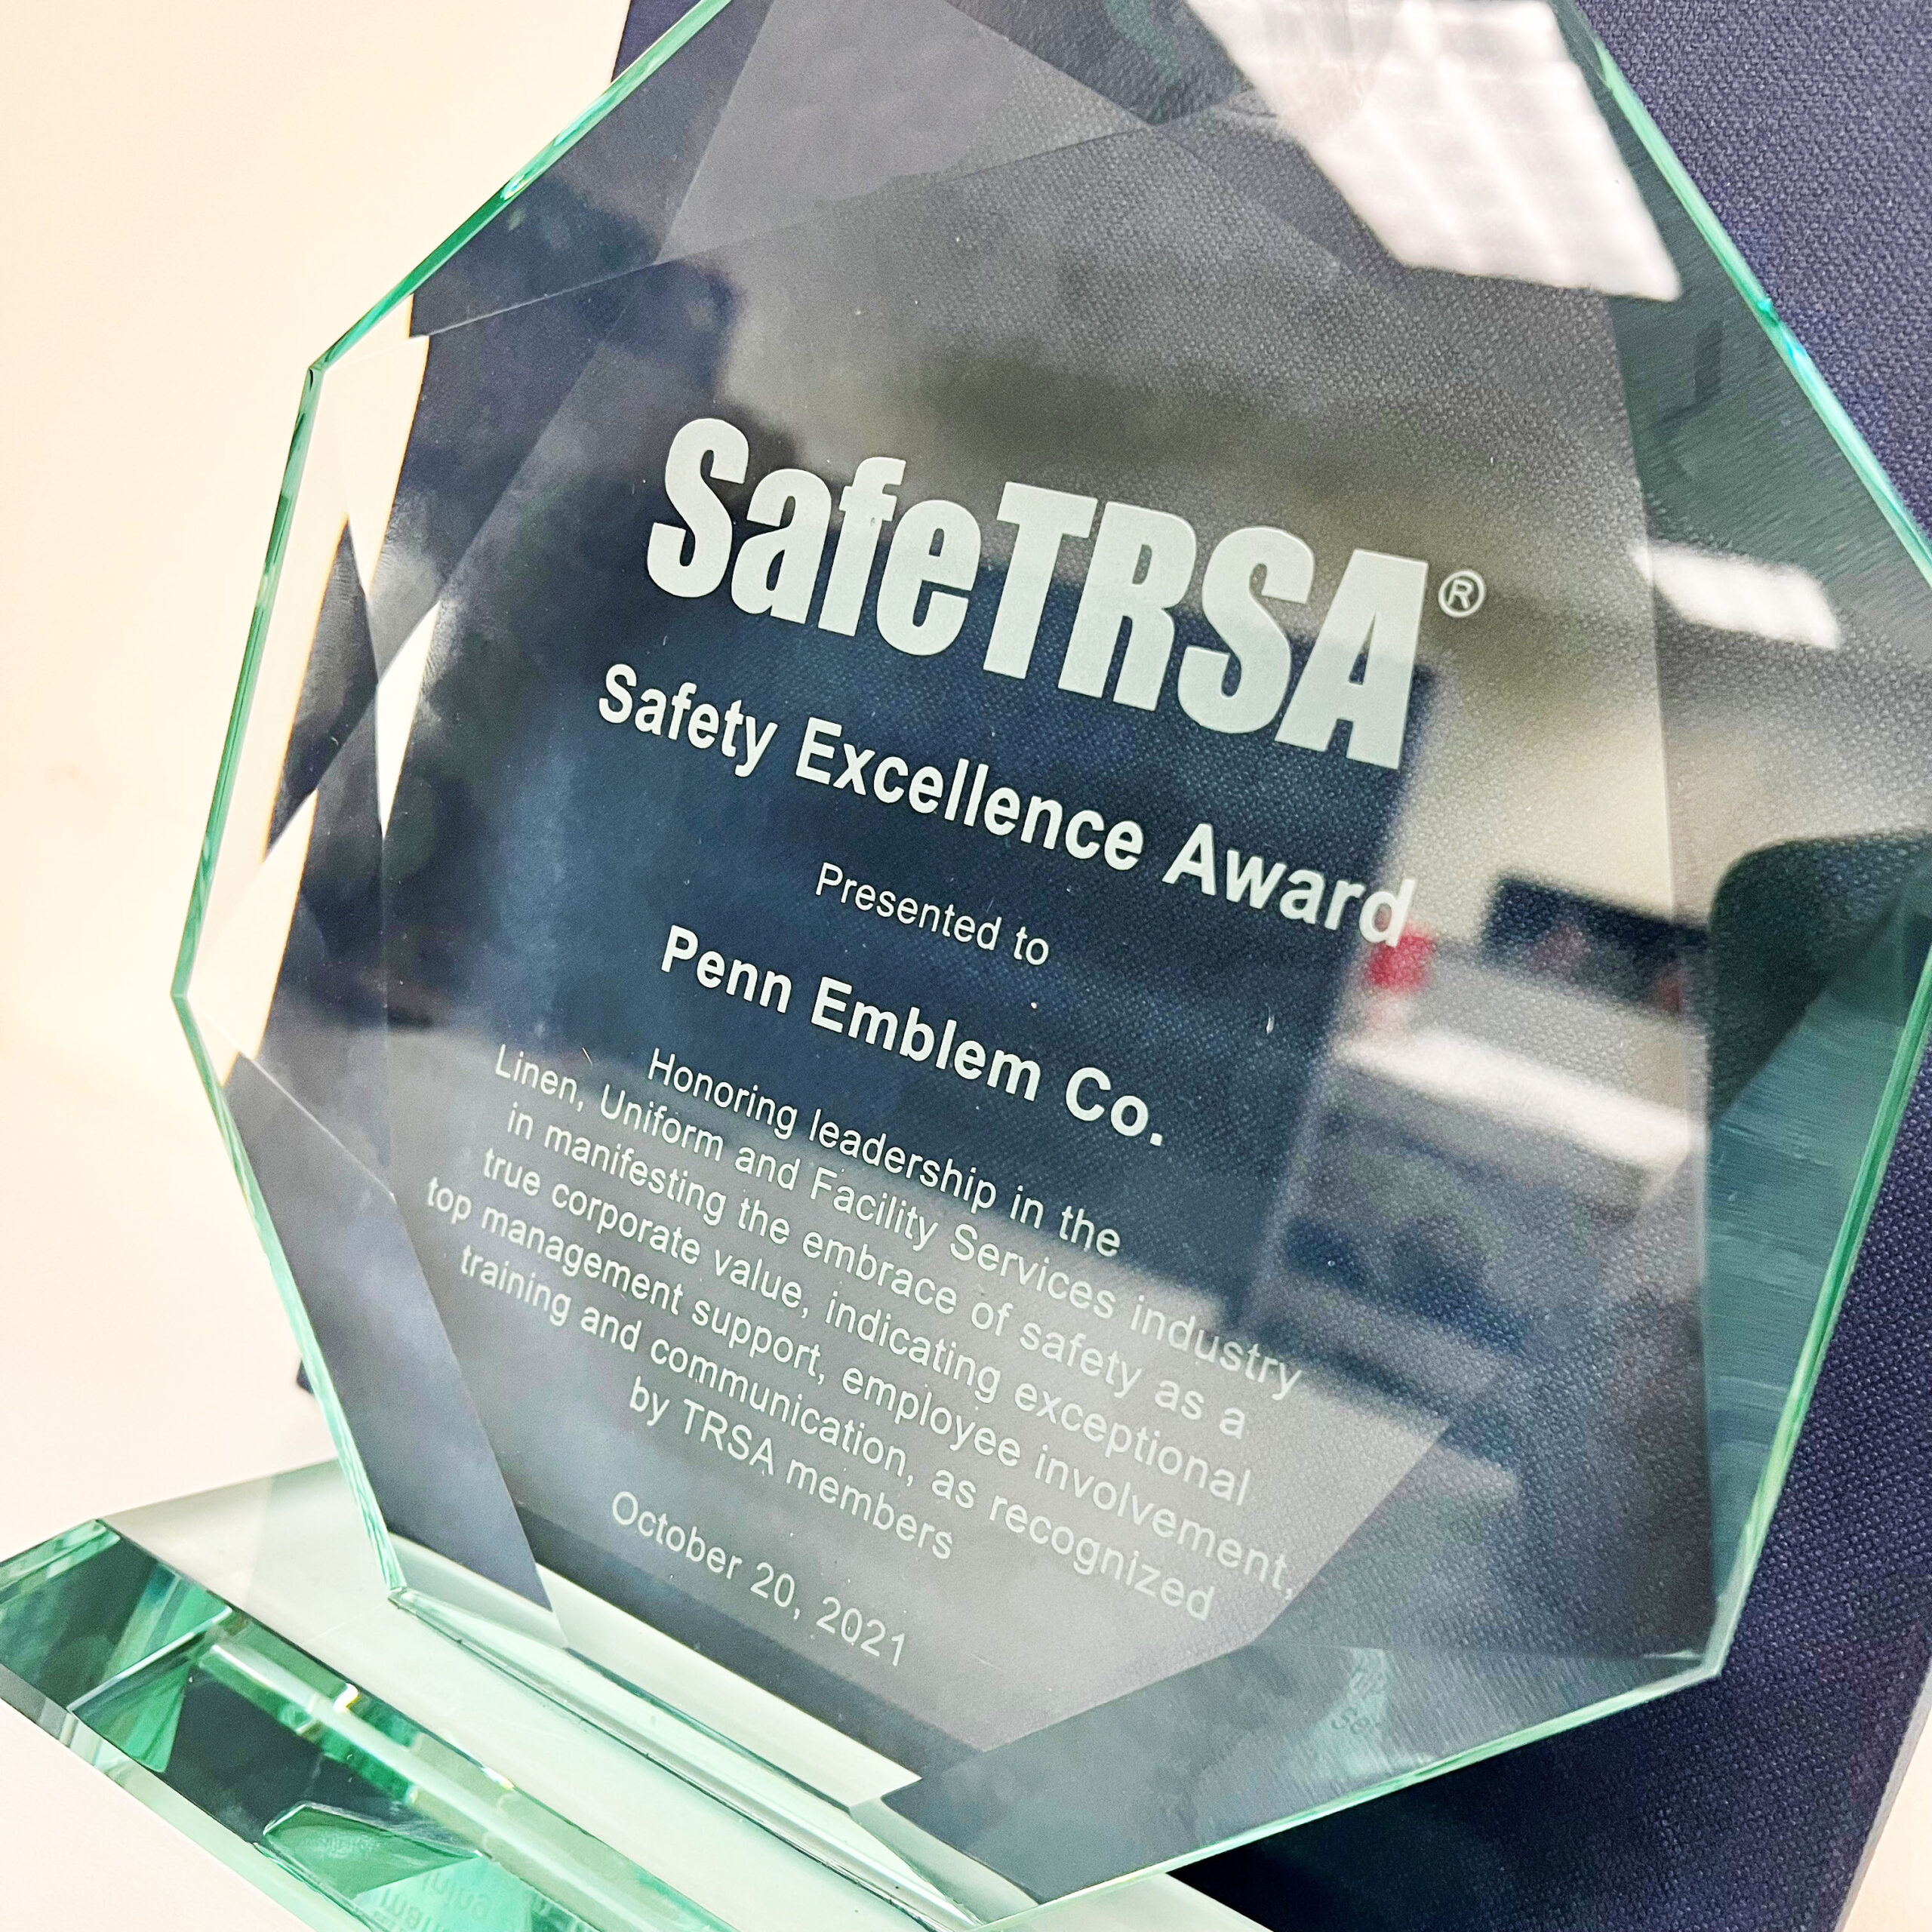 blog - Penn Emblem Wins TRSA Safety Award 2021